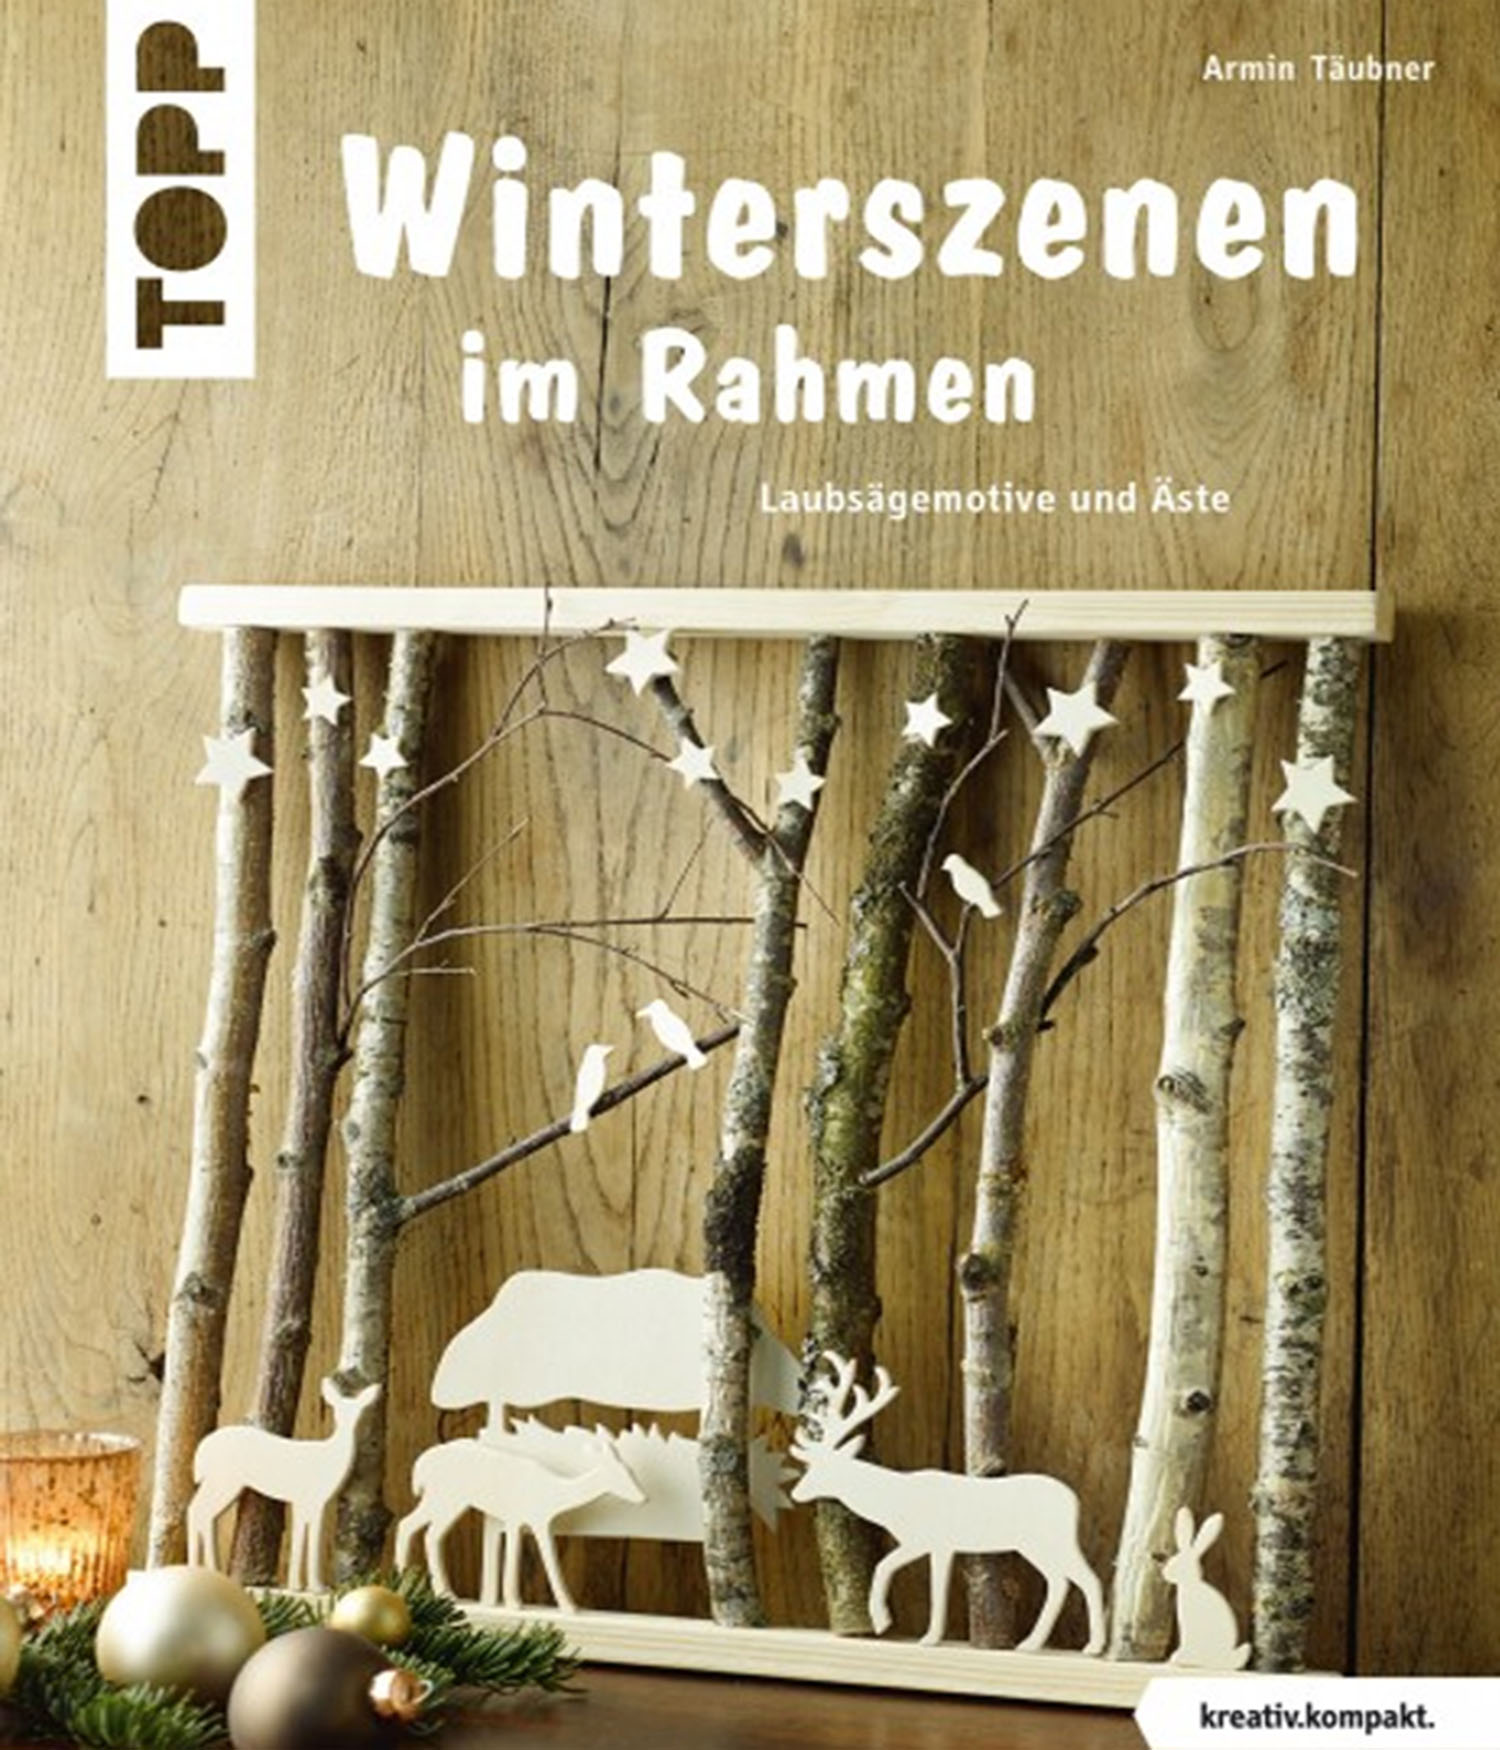 Livre Winterszenen im Rahmen d'Armin Taübner